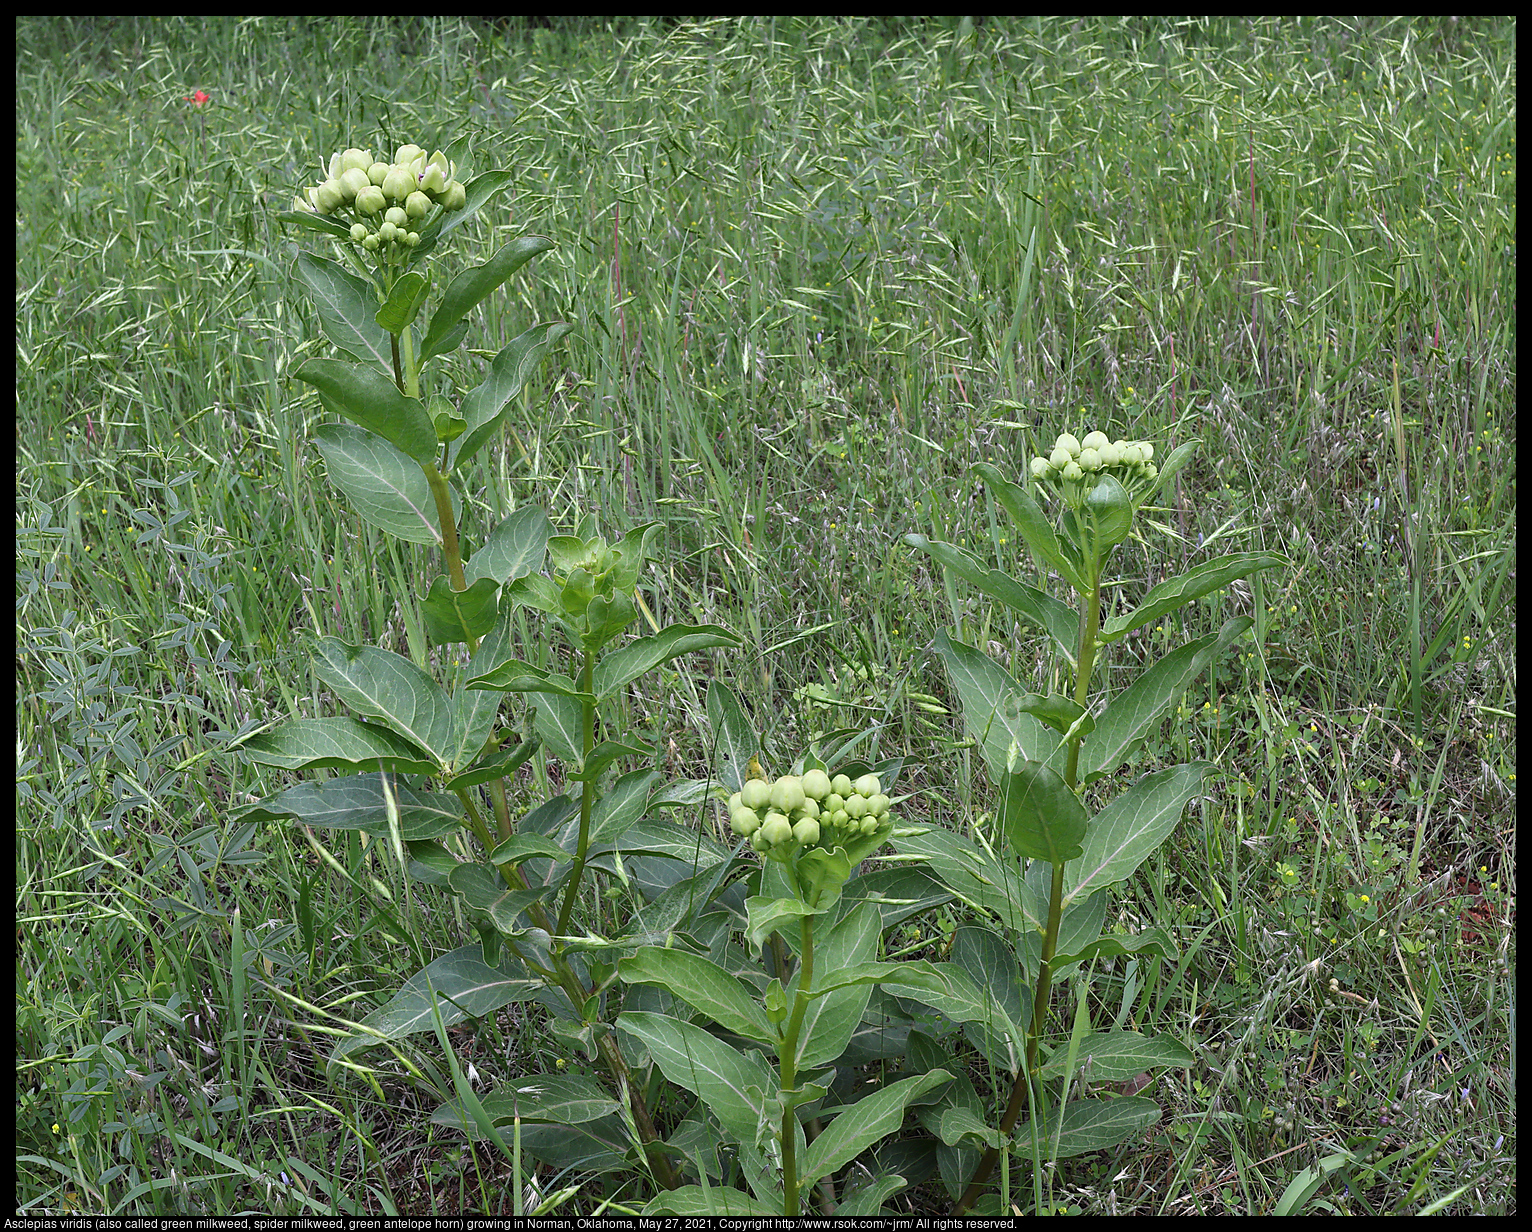 Asclepias viridis (also called green milkweed, spider milkweed, green antelope horn) growing in Norman, Oklahoma, May 27, 2021